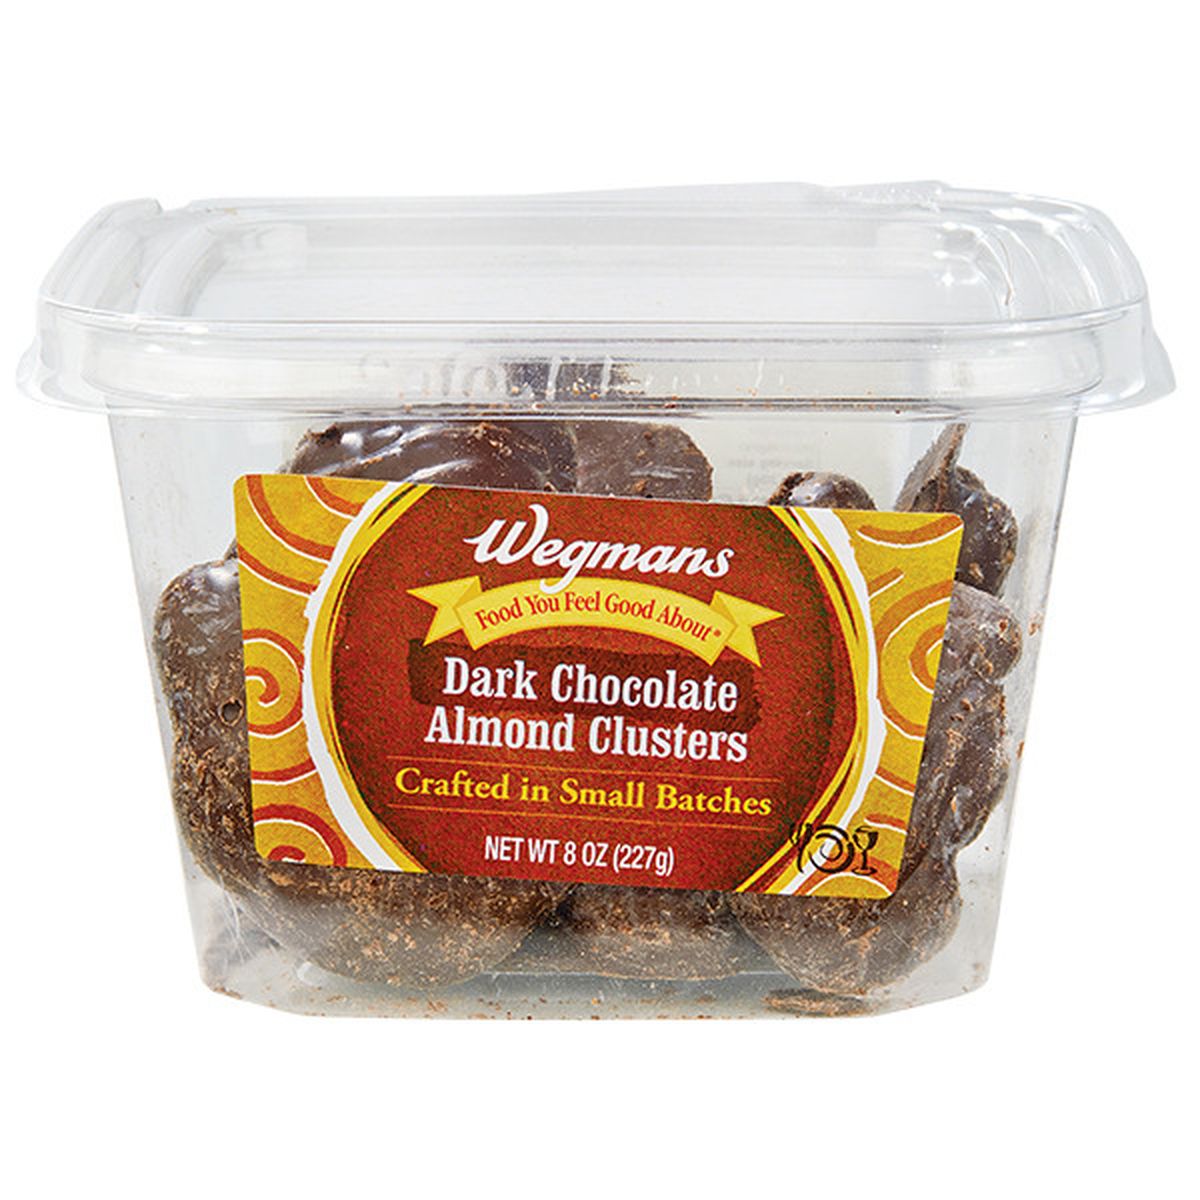 Calories in Wegmans Dark Chocolate Almond Clusters